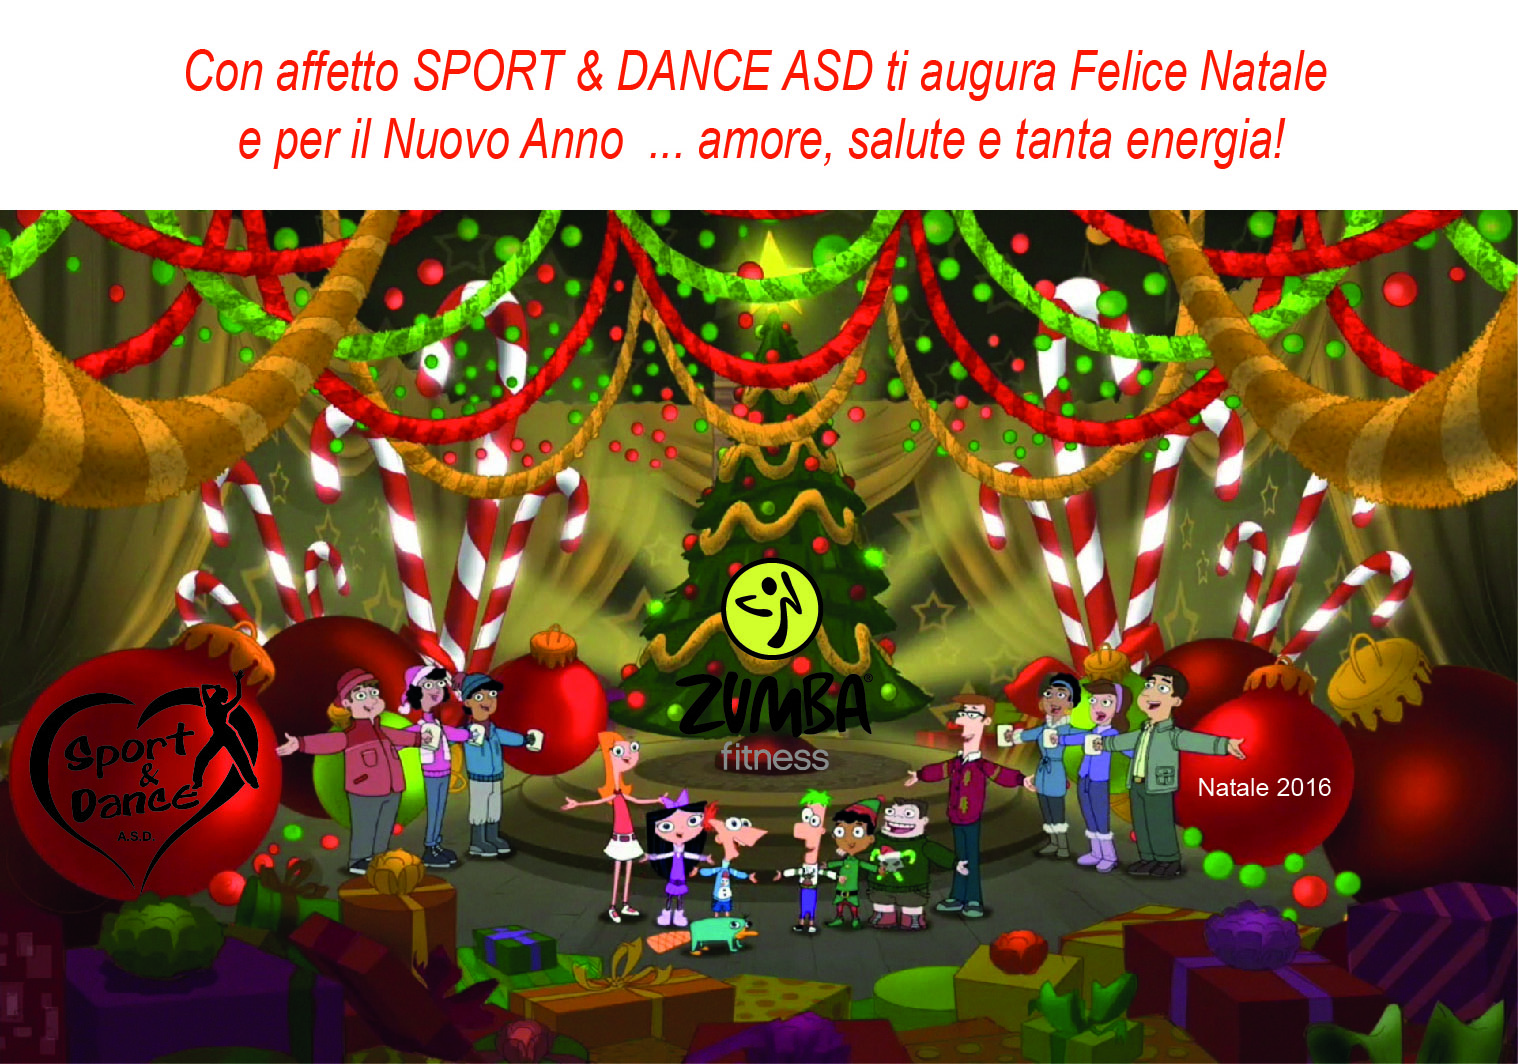 Auguri Di Natale Zumba.22 Dicembre 2016 Zumba Christmas Party Sport Dance Asd Treviso